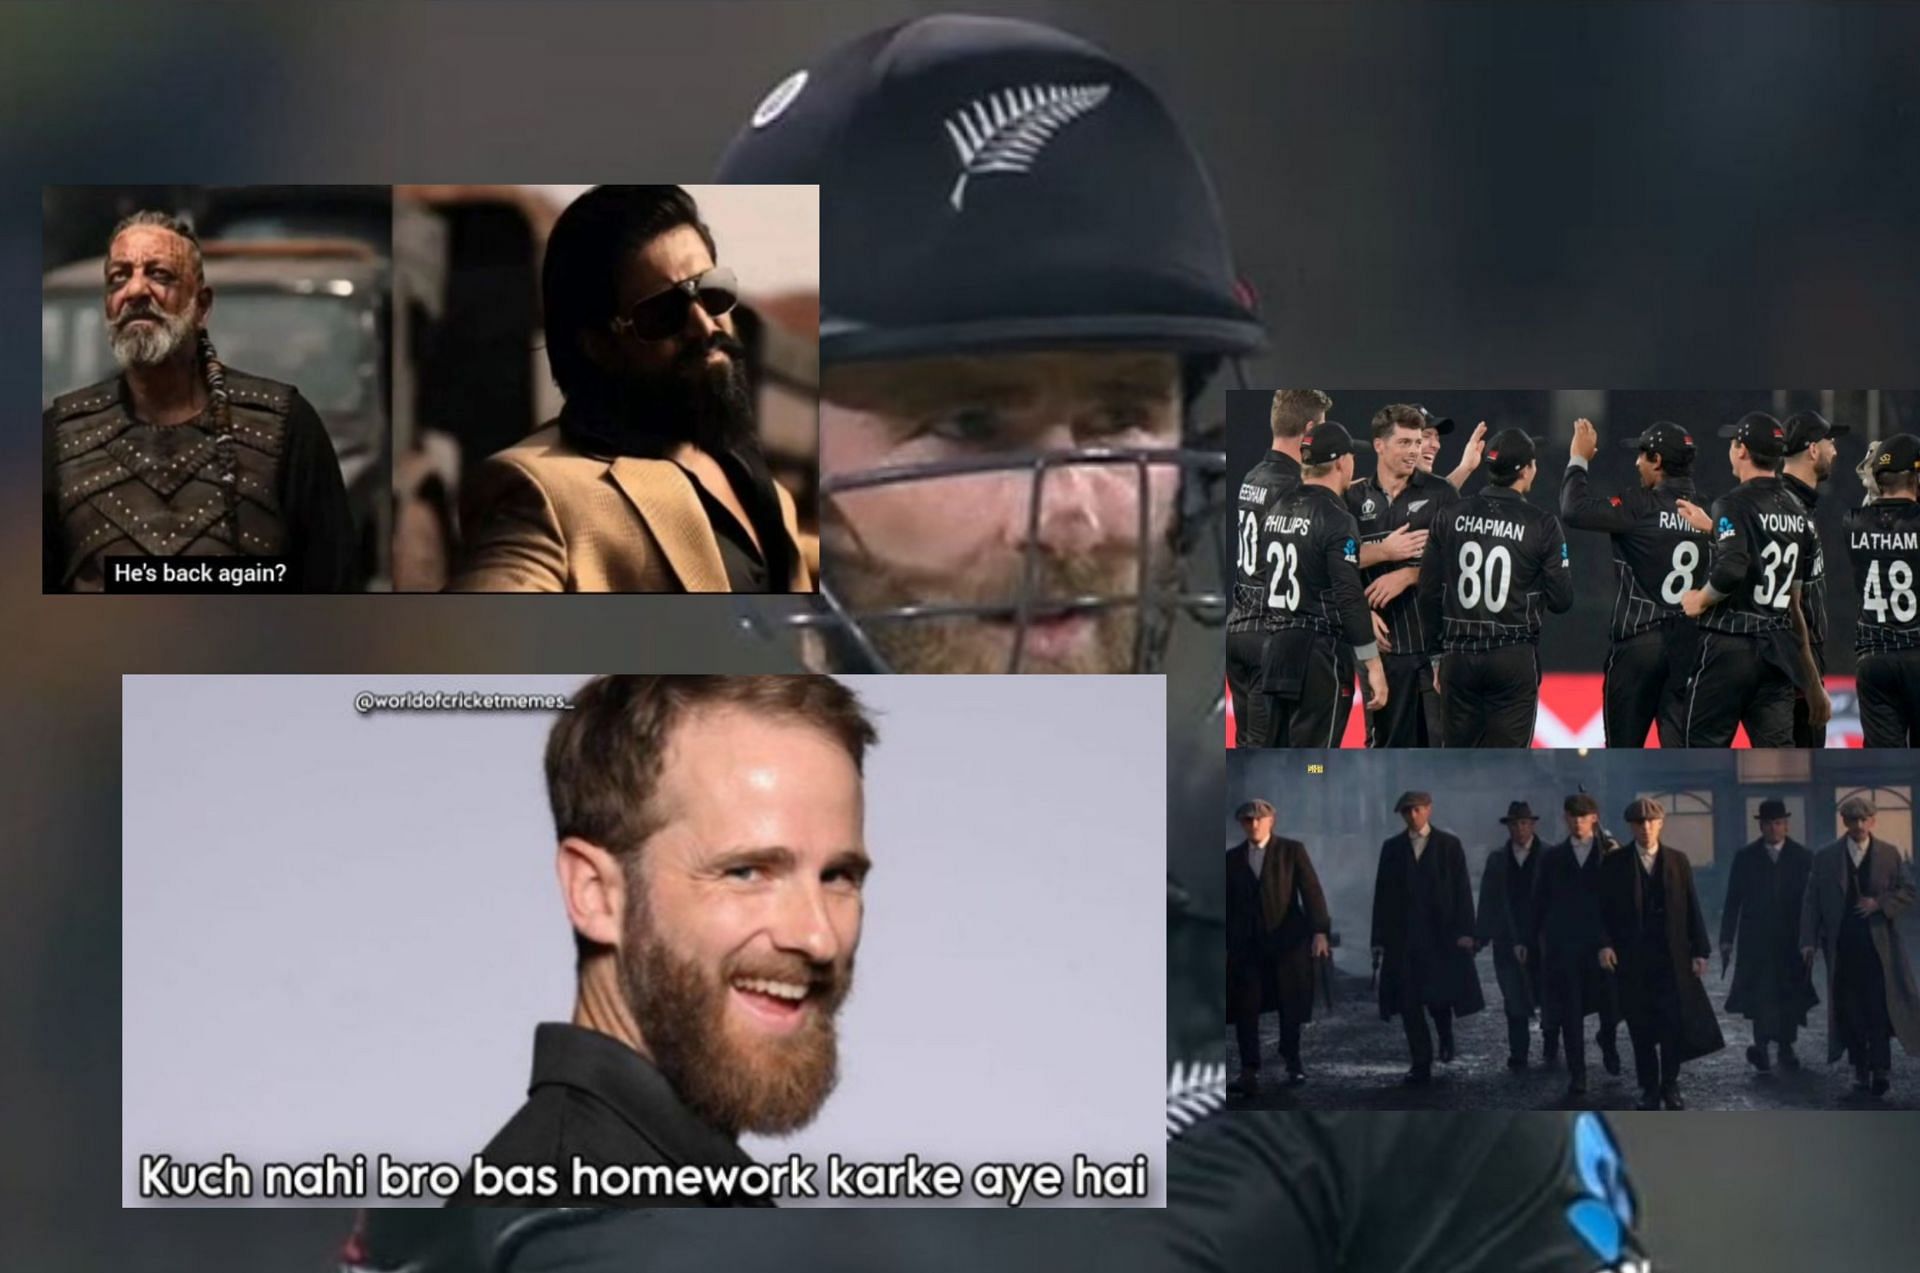 Fans react after New Zealand